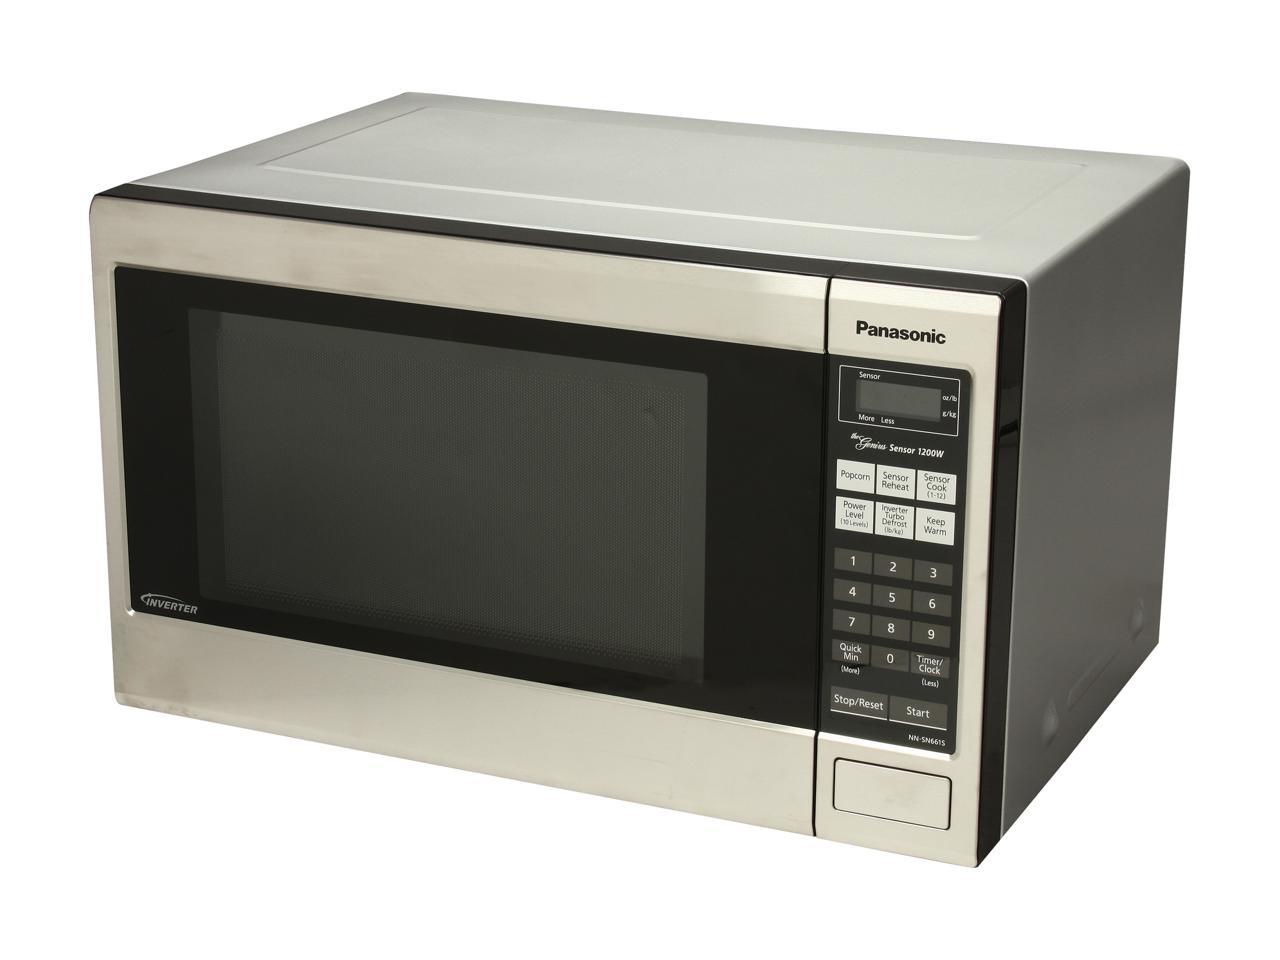 Panasonic Family Size 1.2 Cu. Ft. Genius Countertop/Built-In Microwave